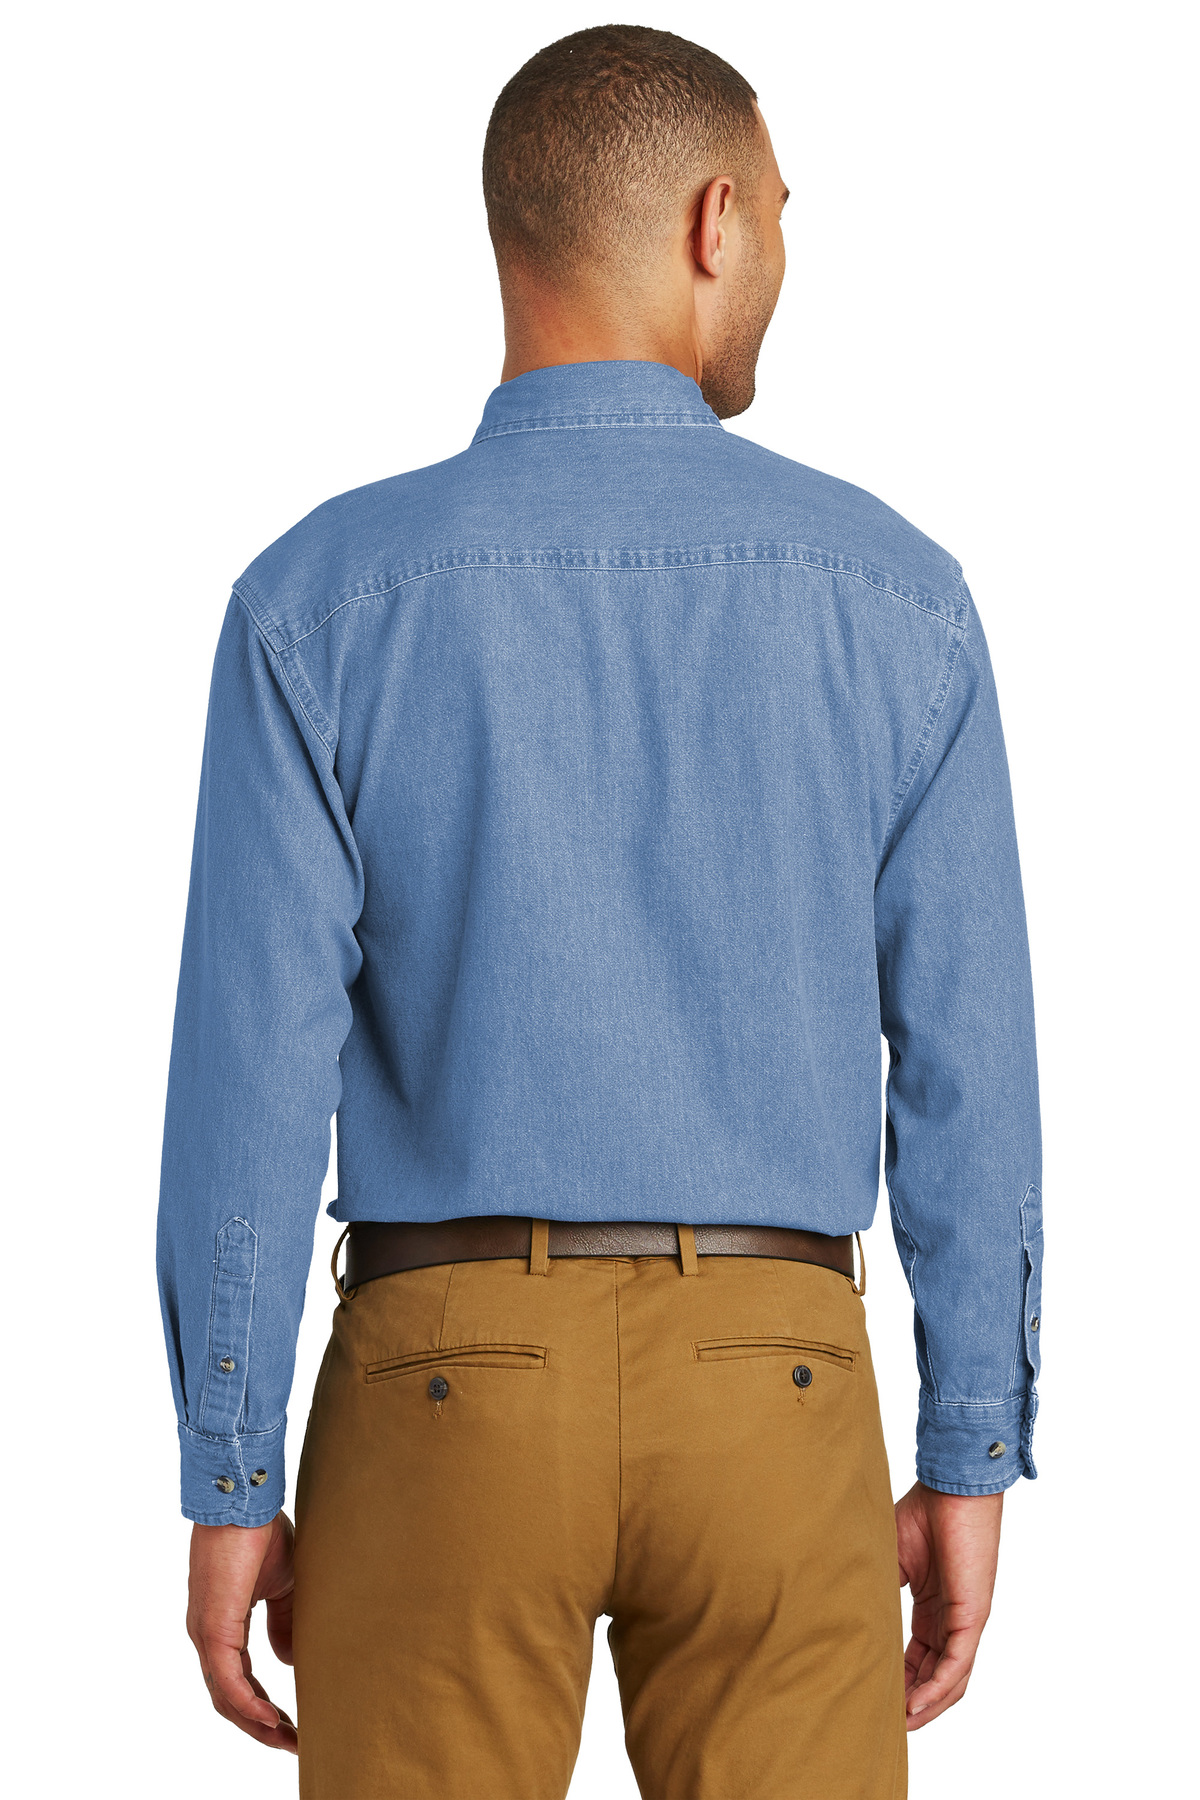 Port & Company - Long Sleeve Value Denim Shirt | Product | Port 